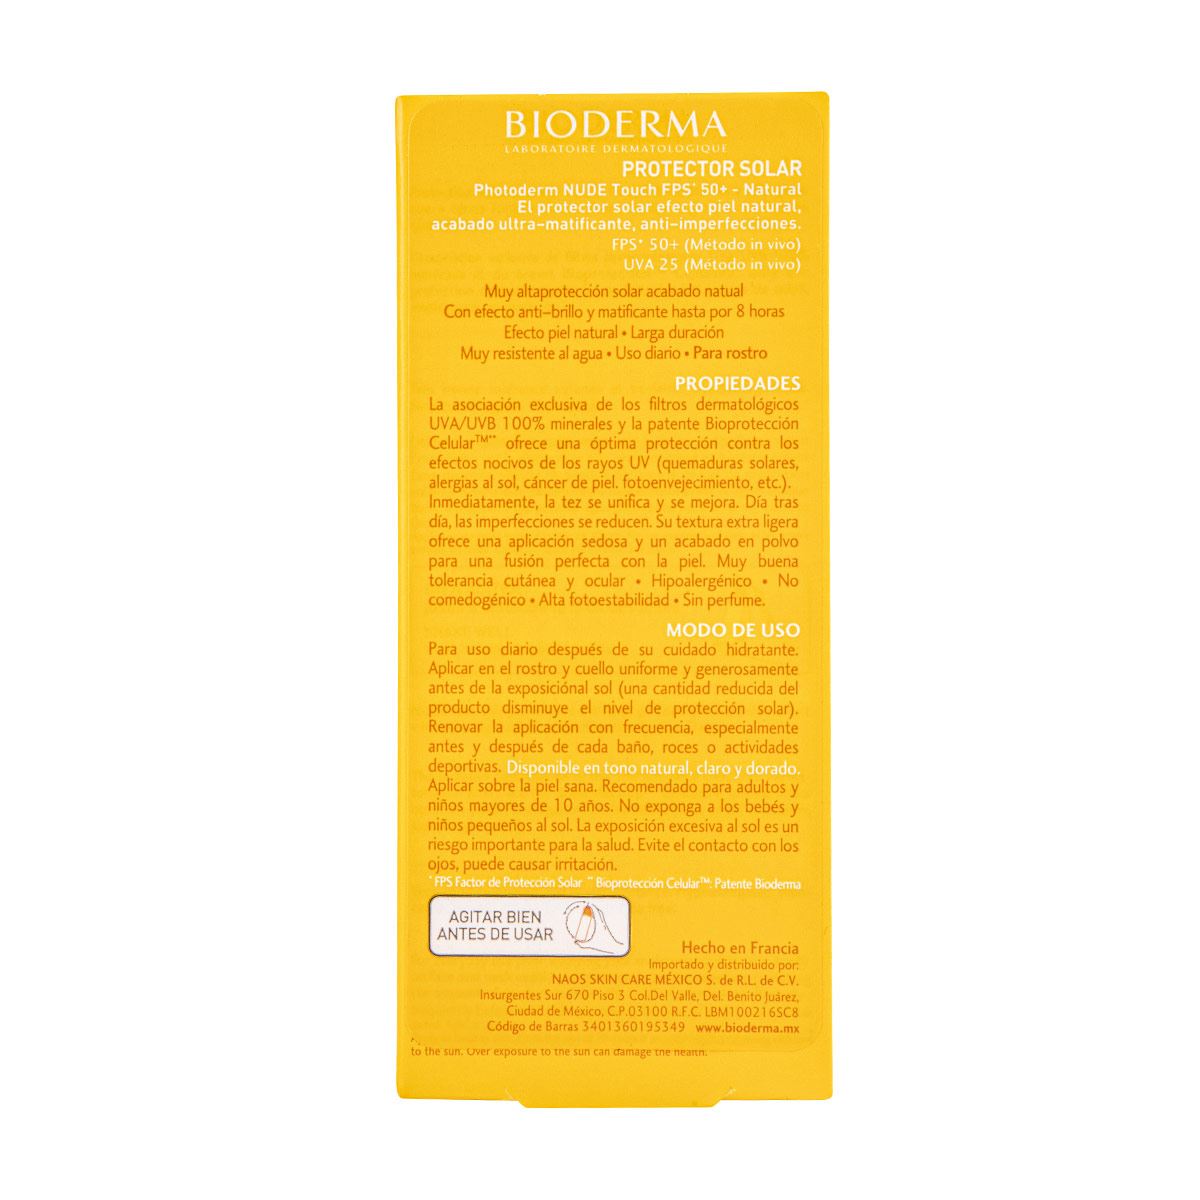 Bioderma Photoderm NUDE Touch SPF 50+ efecto piel Natural, 40 ml